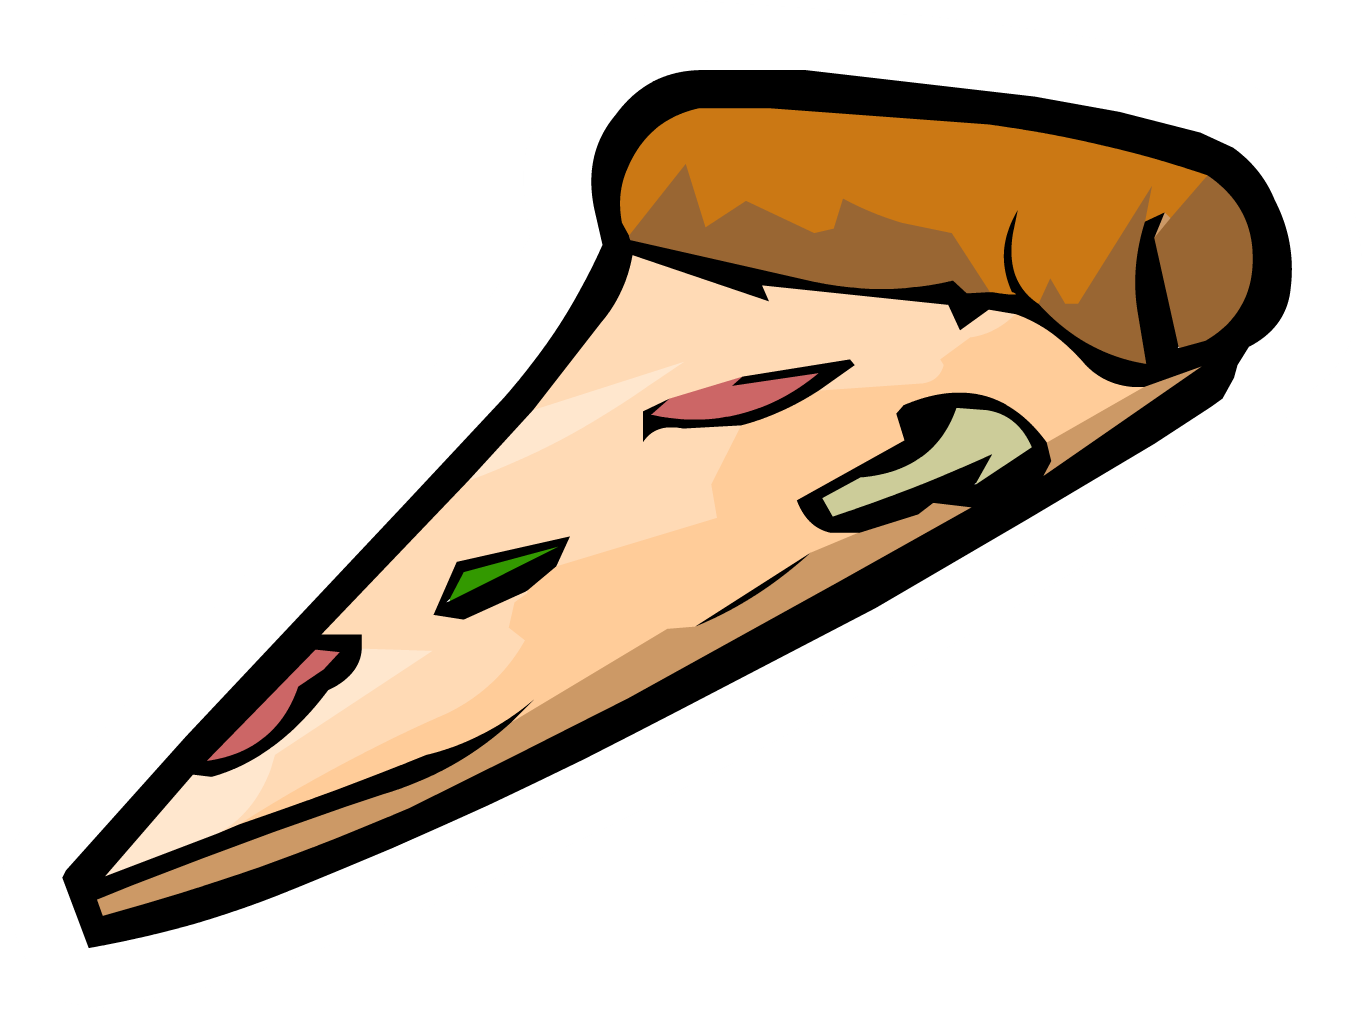 Pizza Slice Cartoon - ClipArt Best